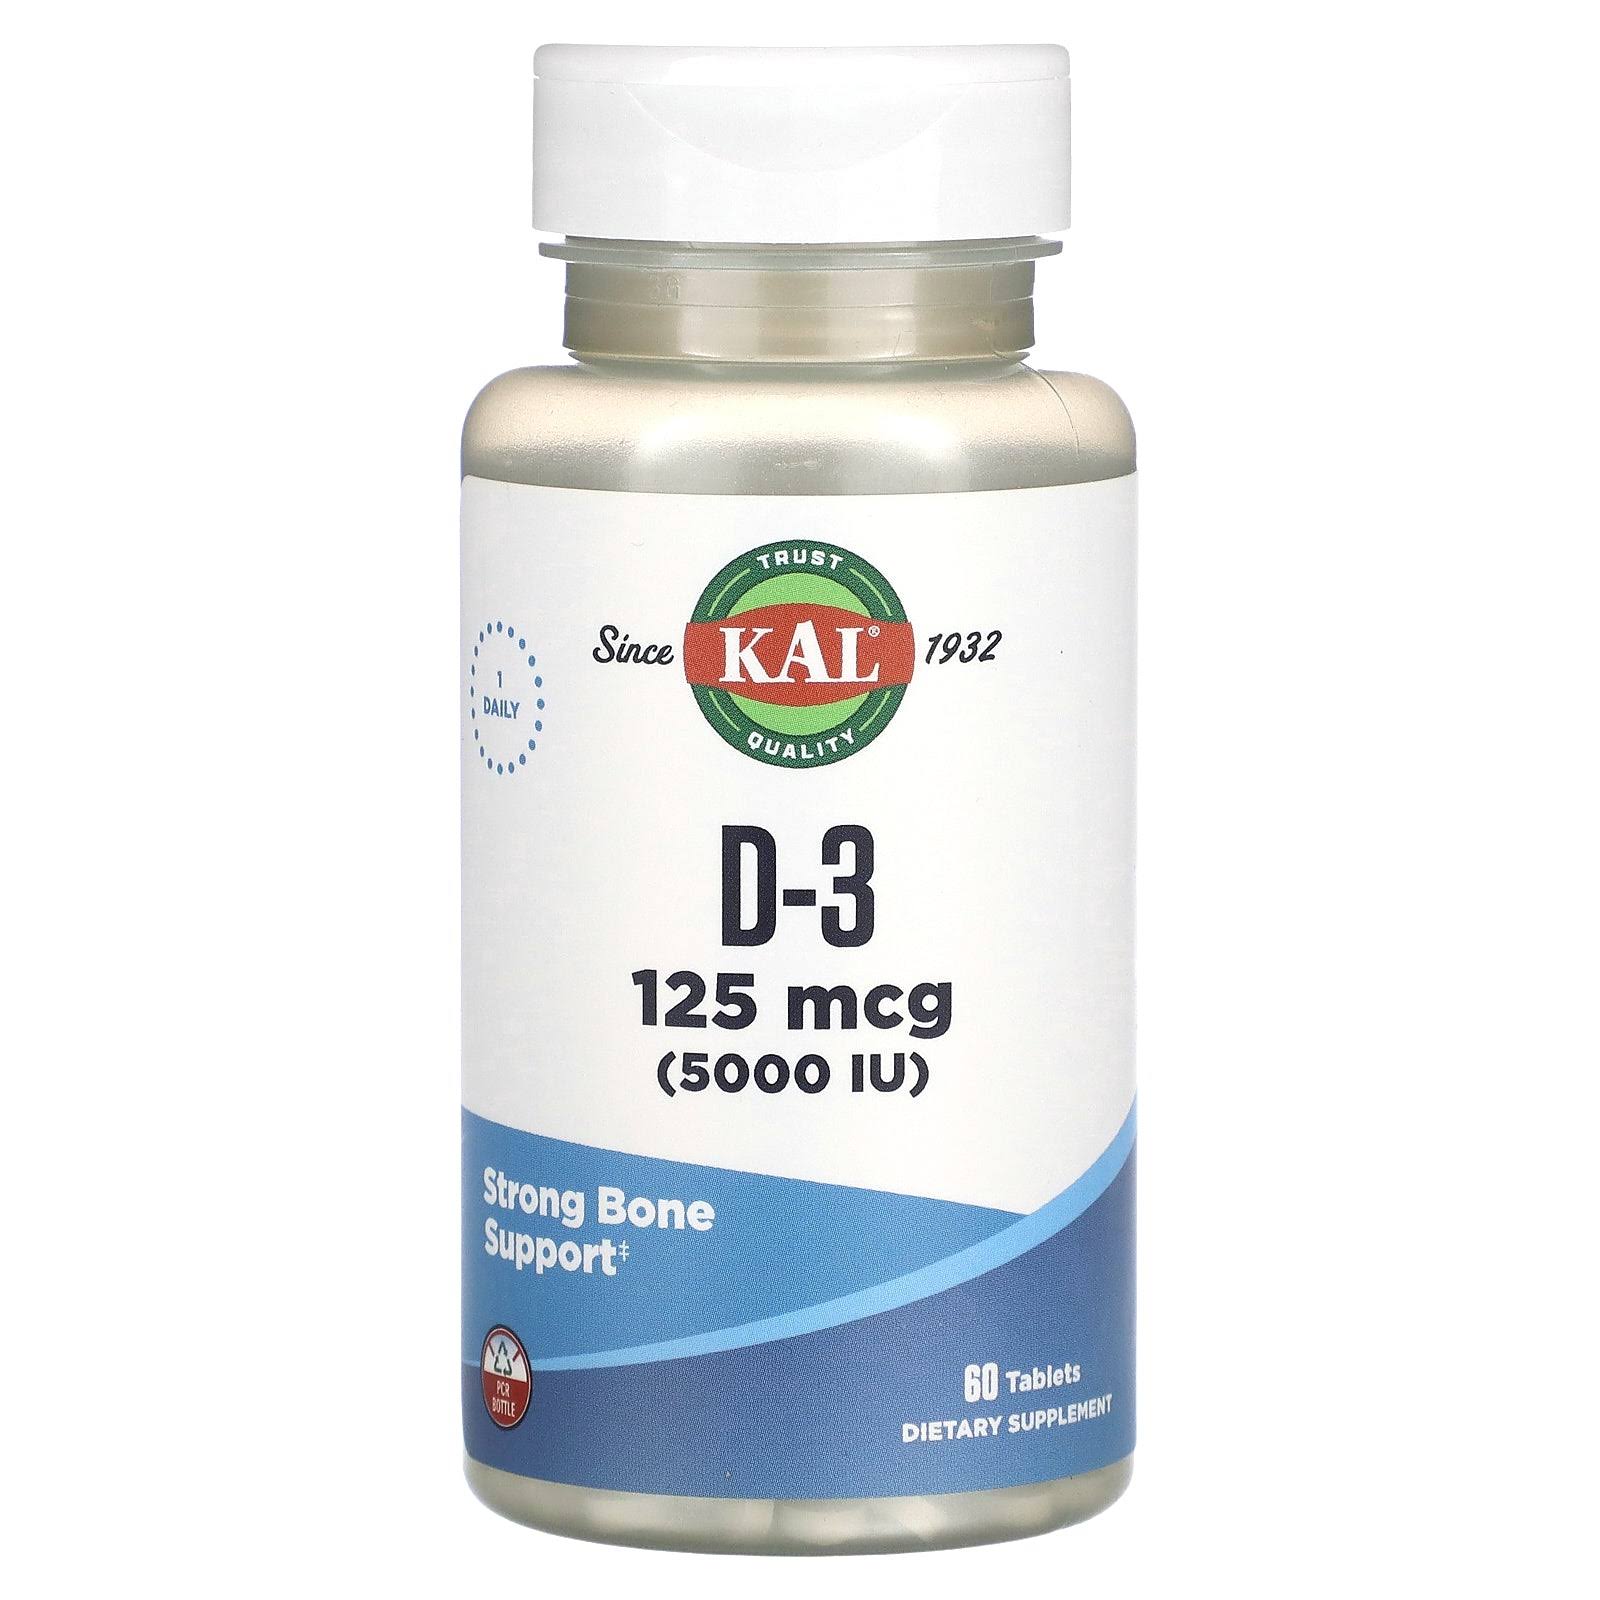 KAL Ultra D3 Supplement - 60 Tablets